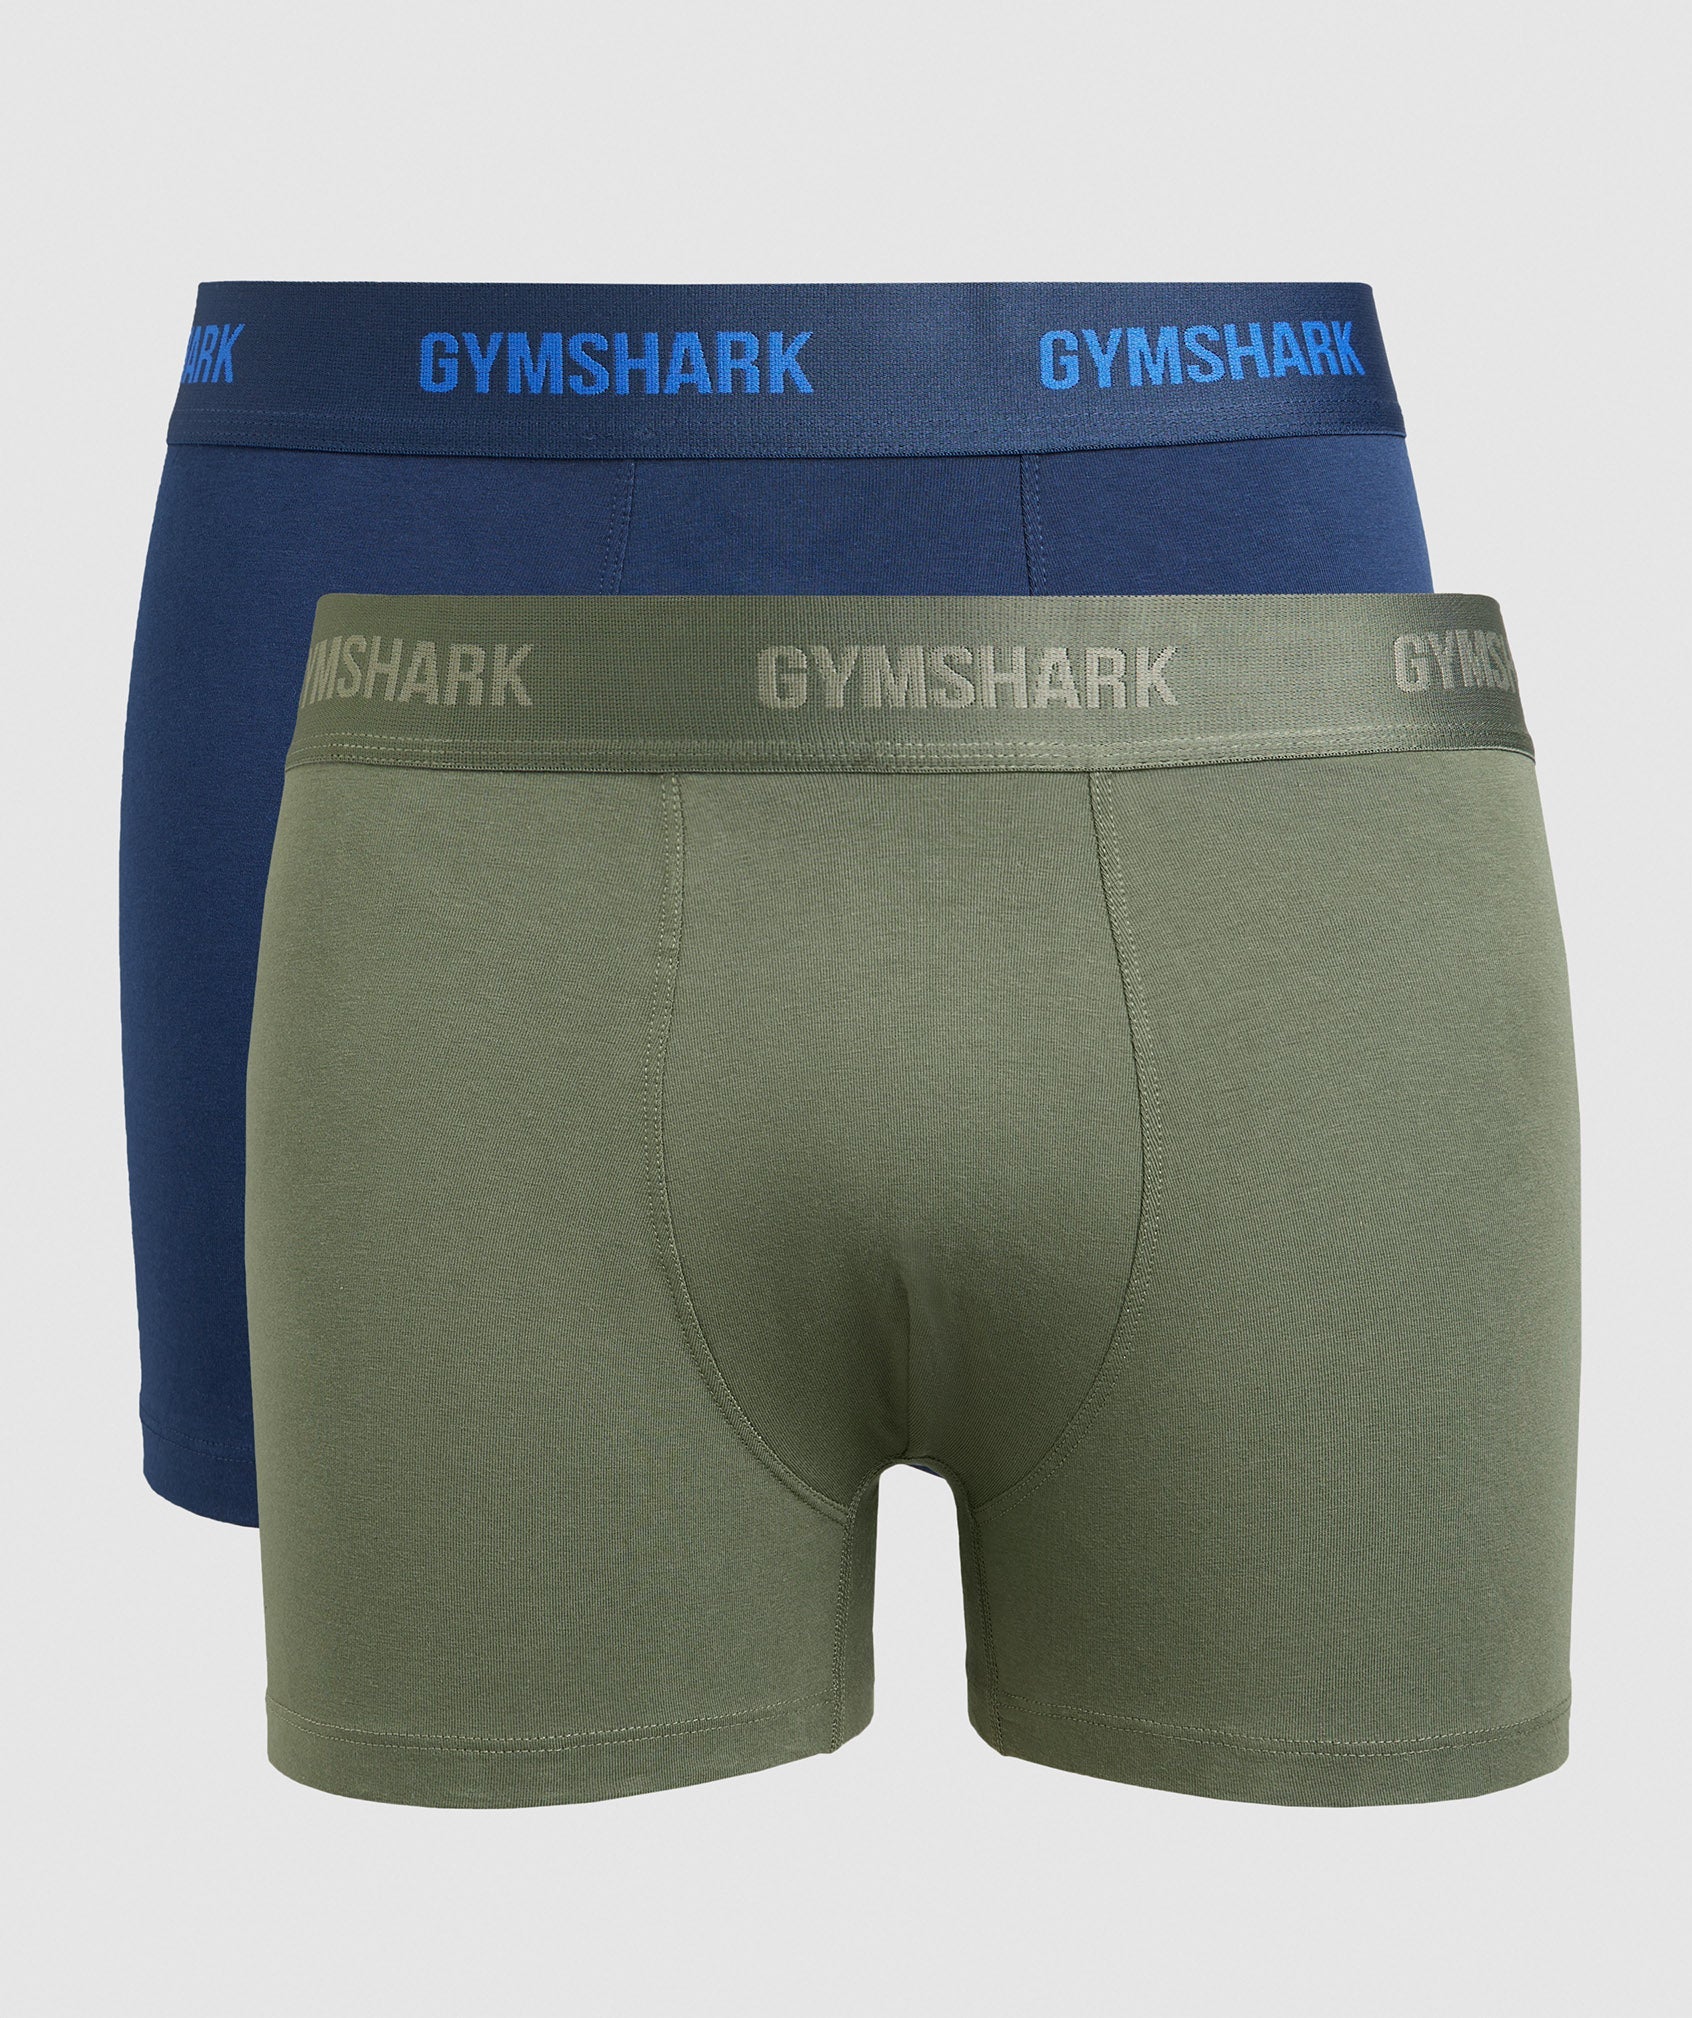 Gymshark, Underwear & Socks, Gymshark Boxers 2pk